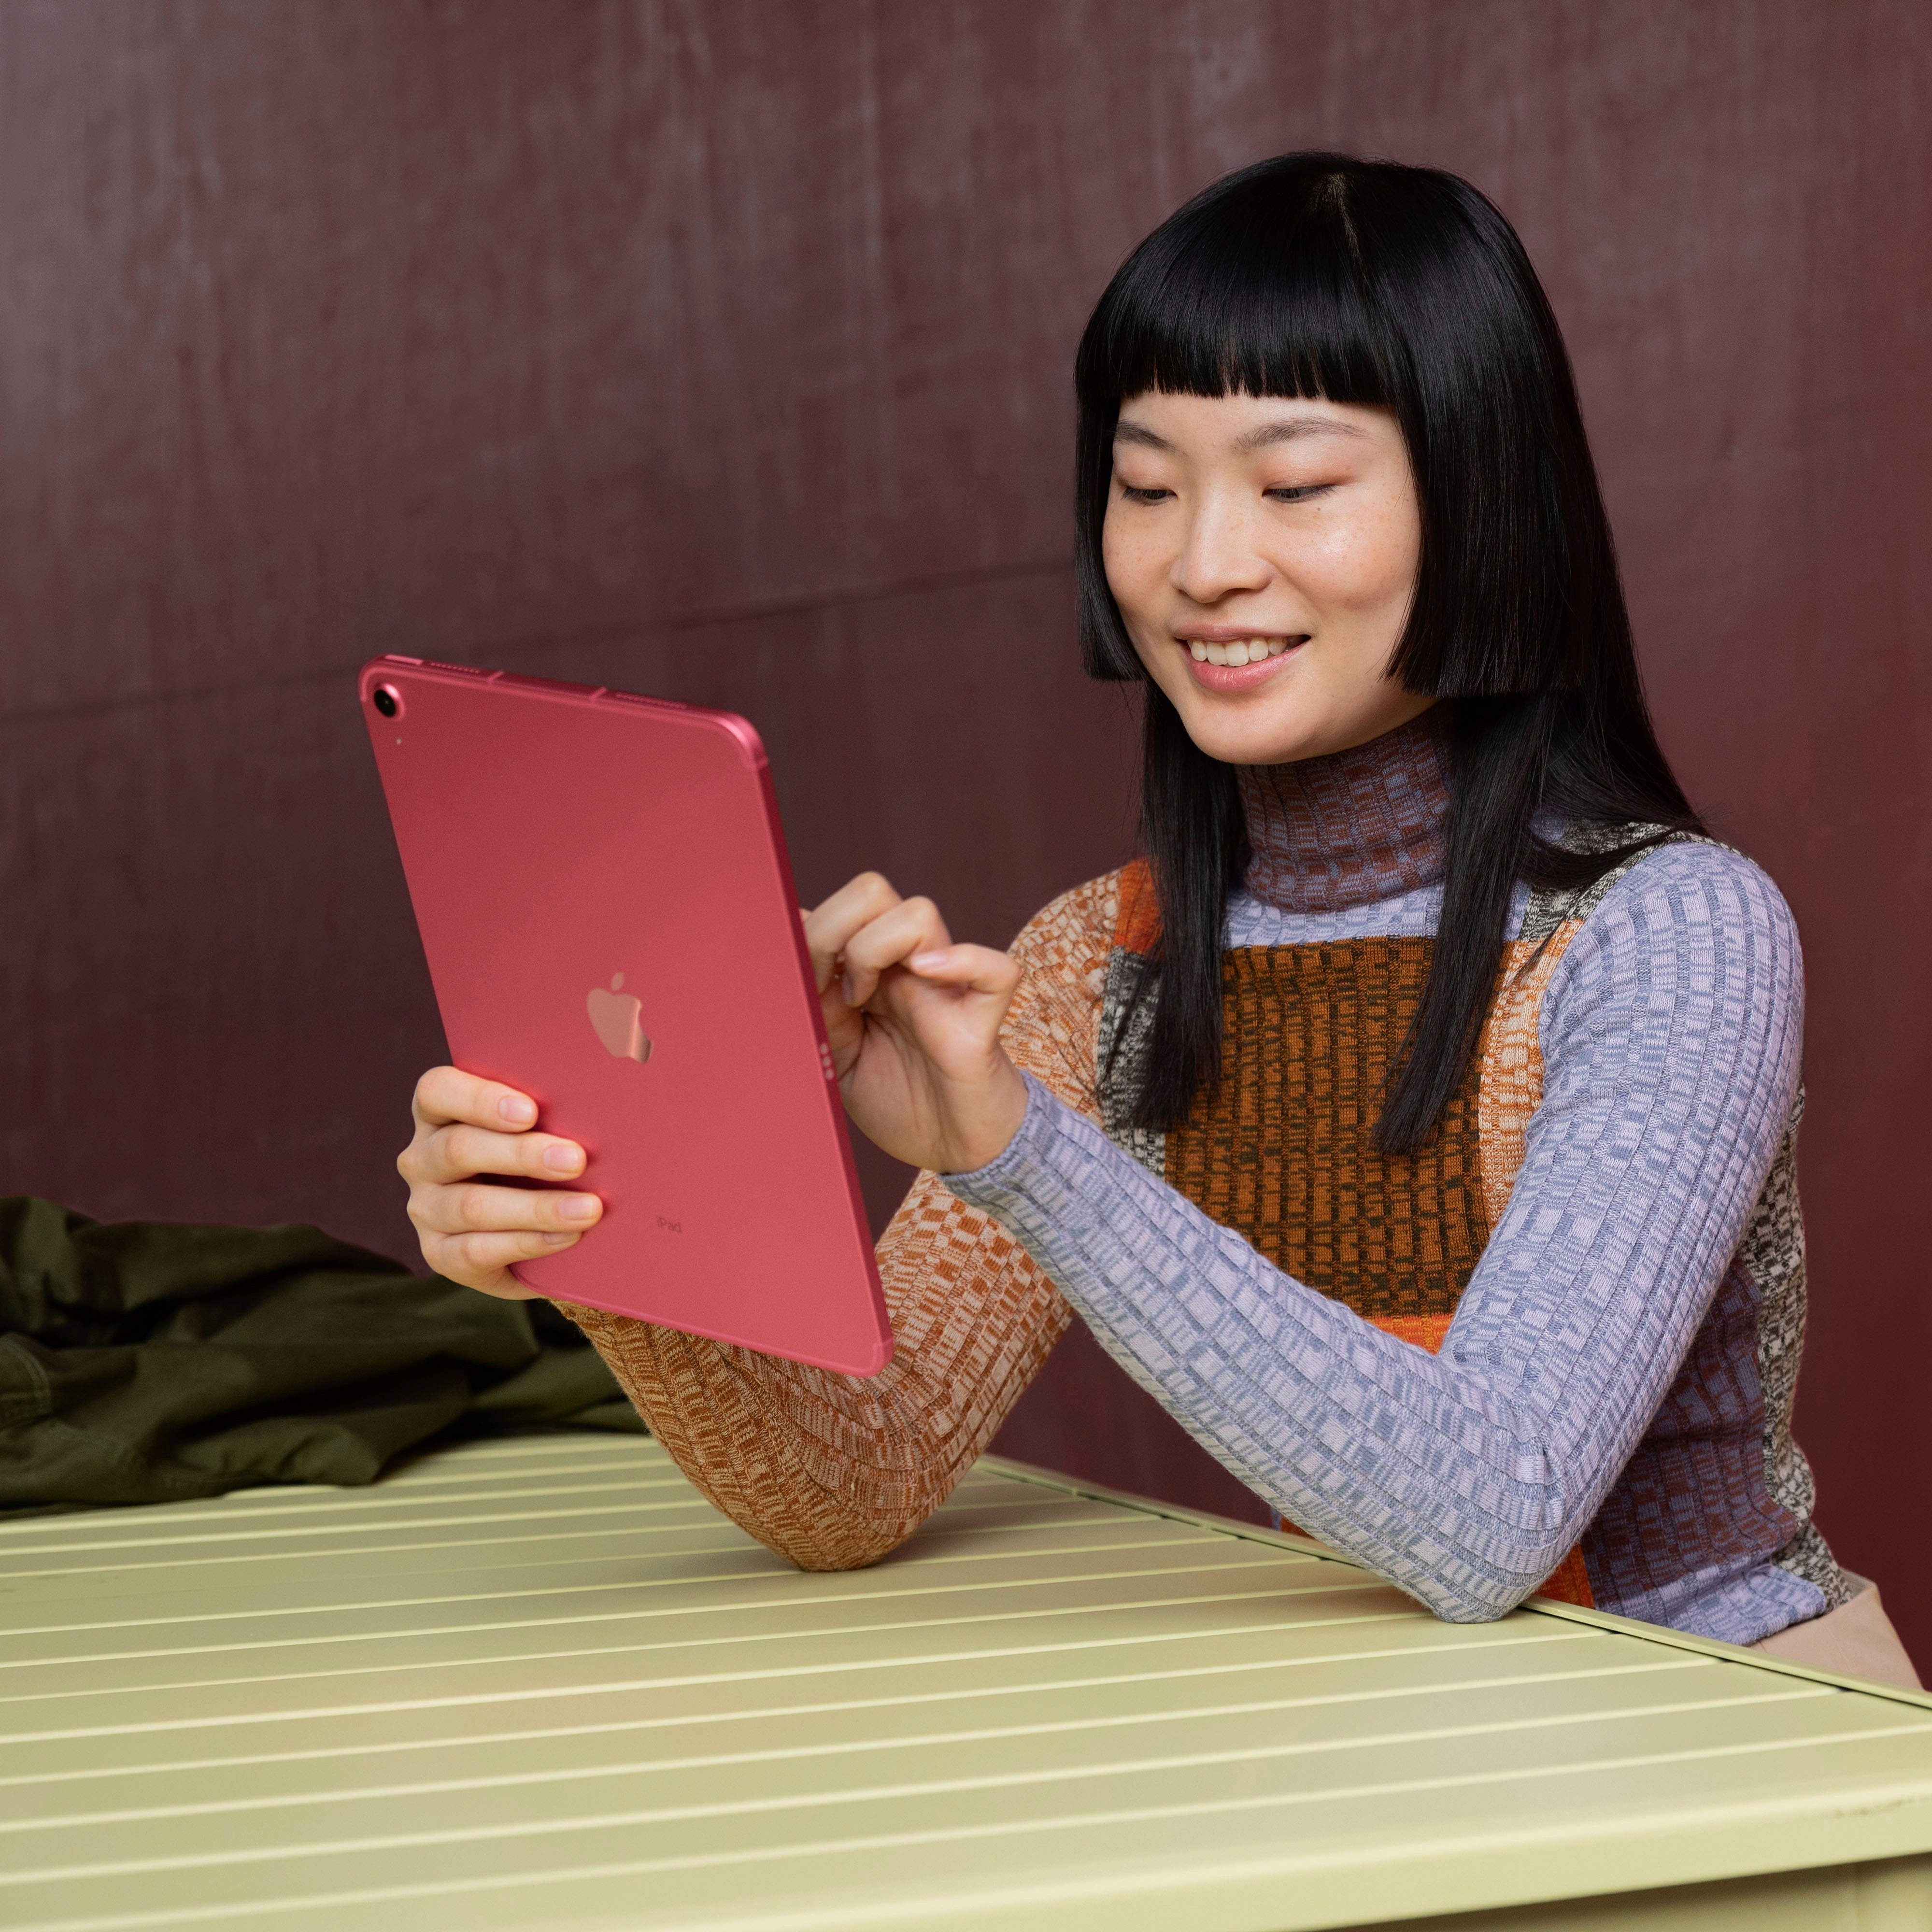 Apple iPad 2022 Wi-Fi iPadOS) 64 Generation) GB, (10 Tablet (10,9", pink